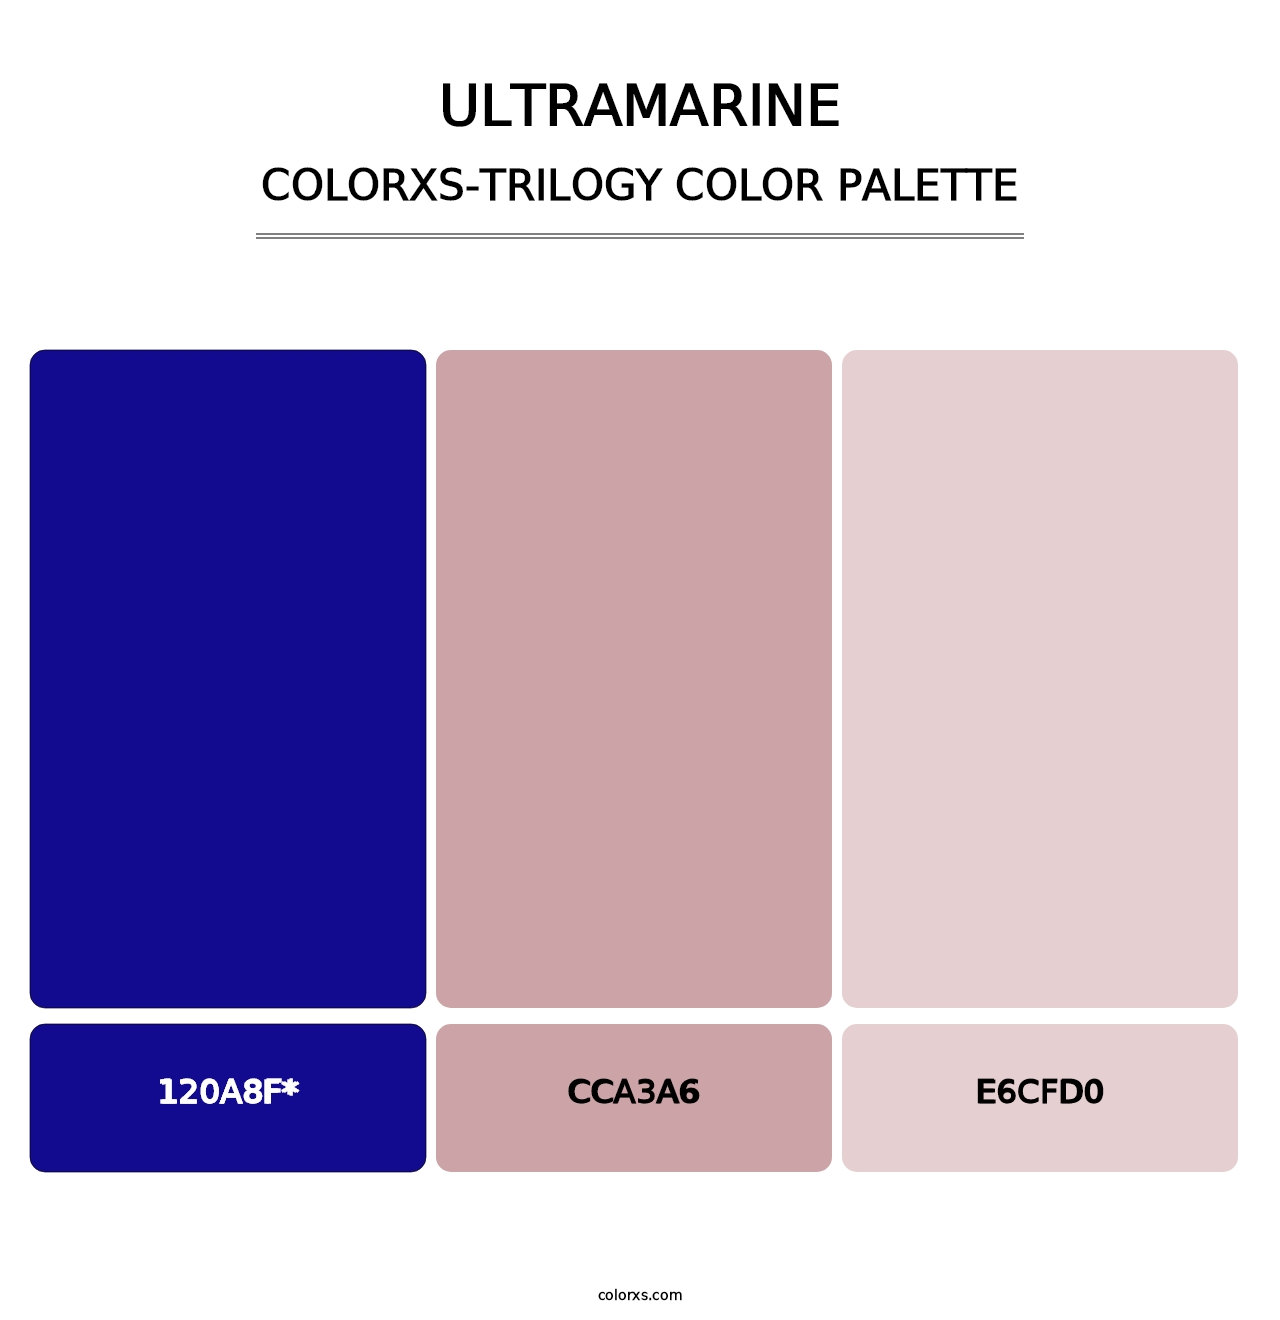 Ultramarine - Colorxs Trilogy Palette